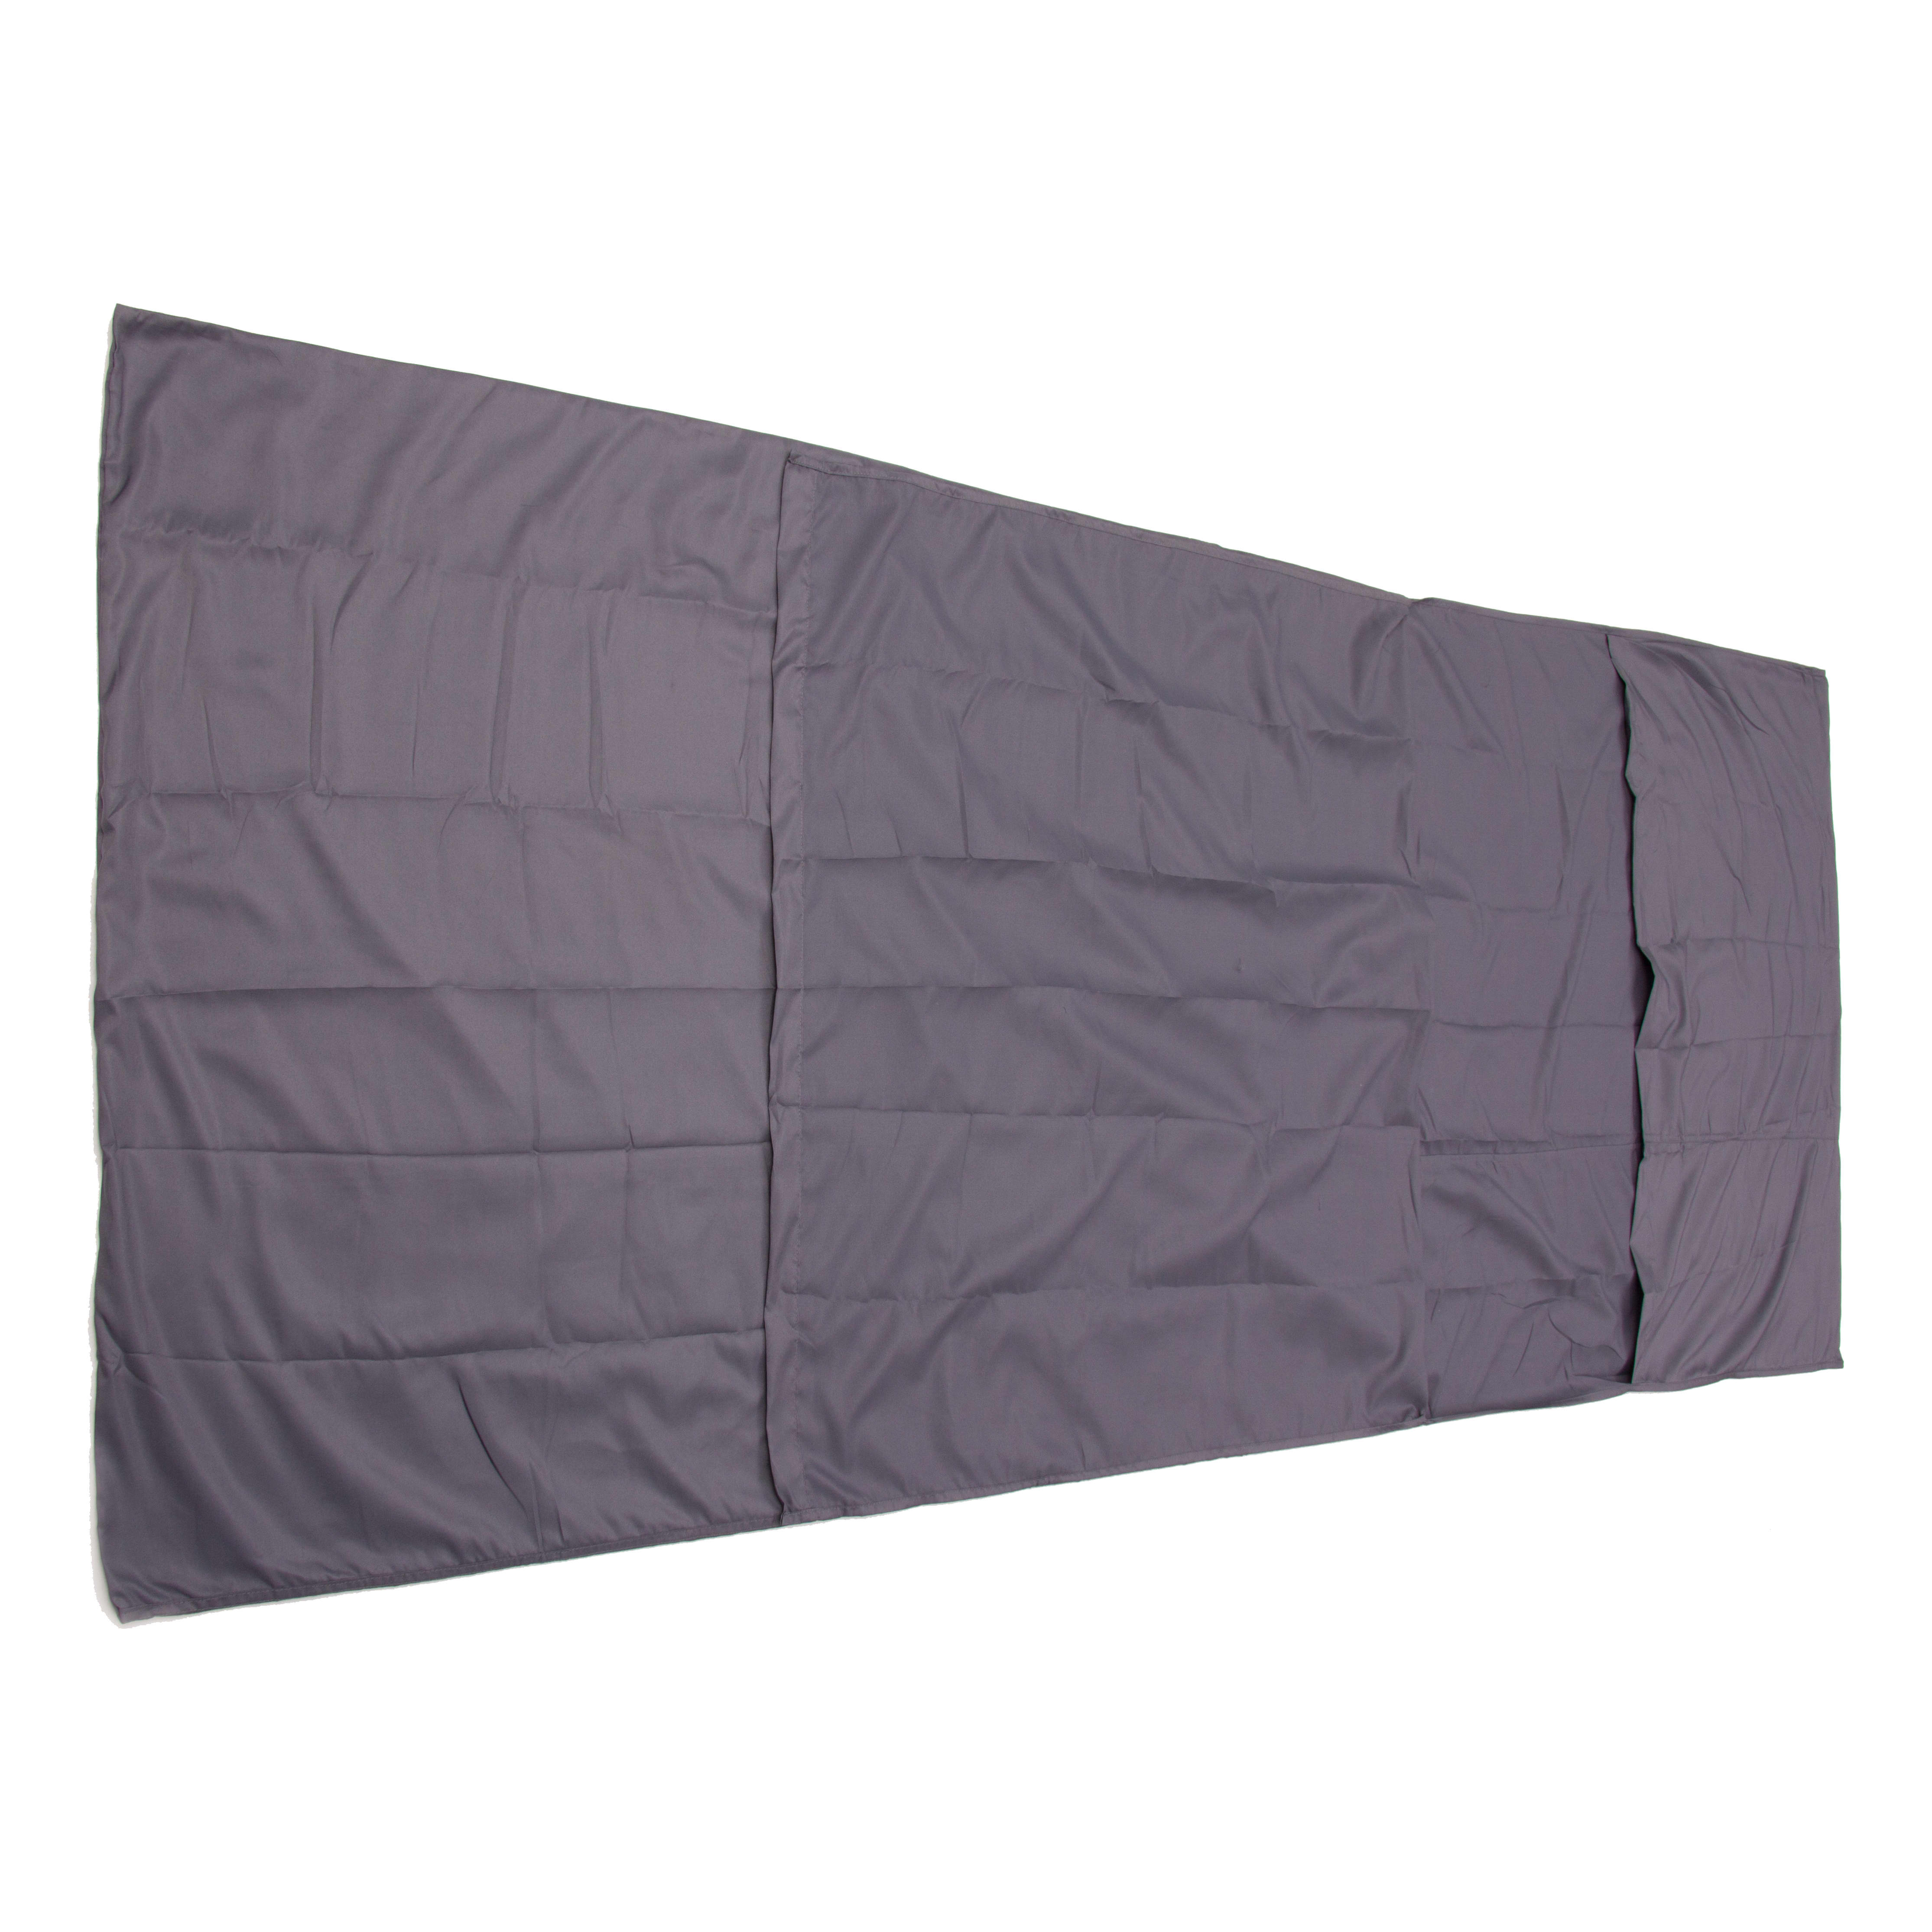 Hotcore® R Series Sleeping Bag